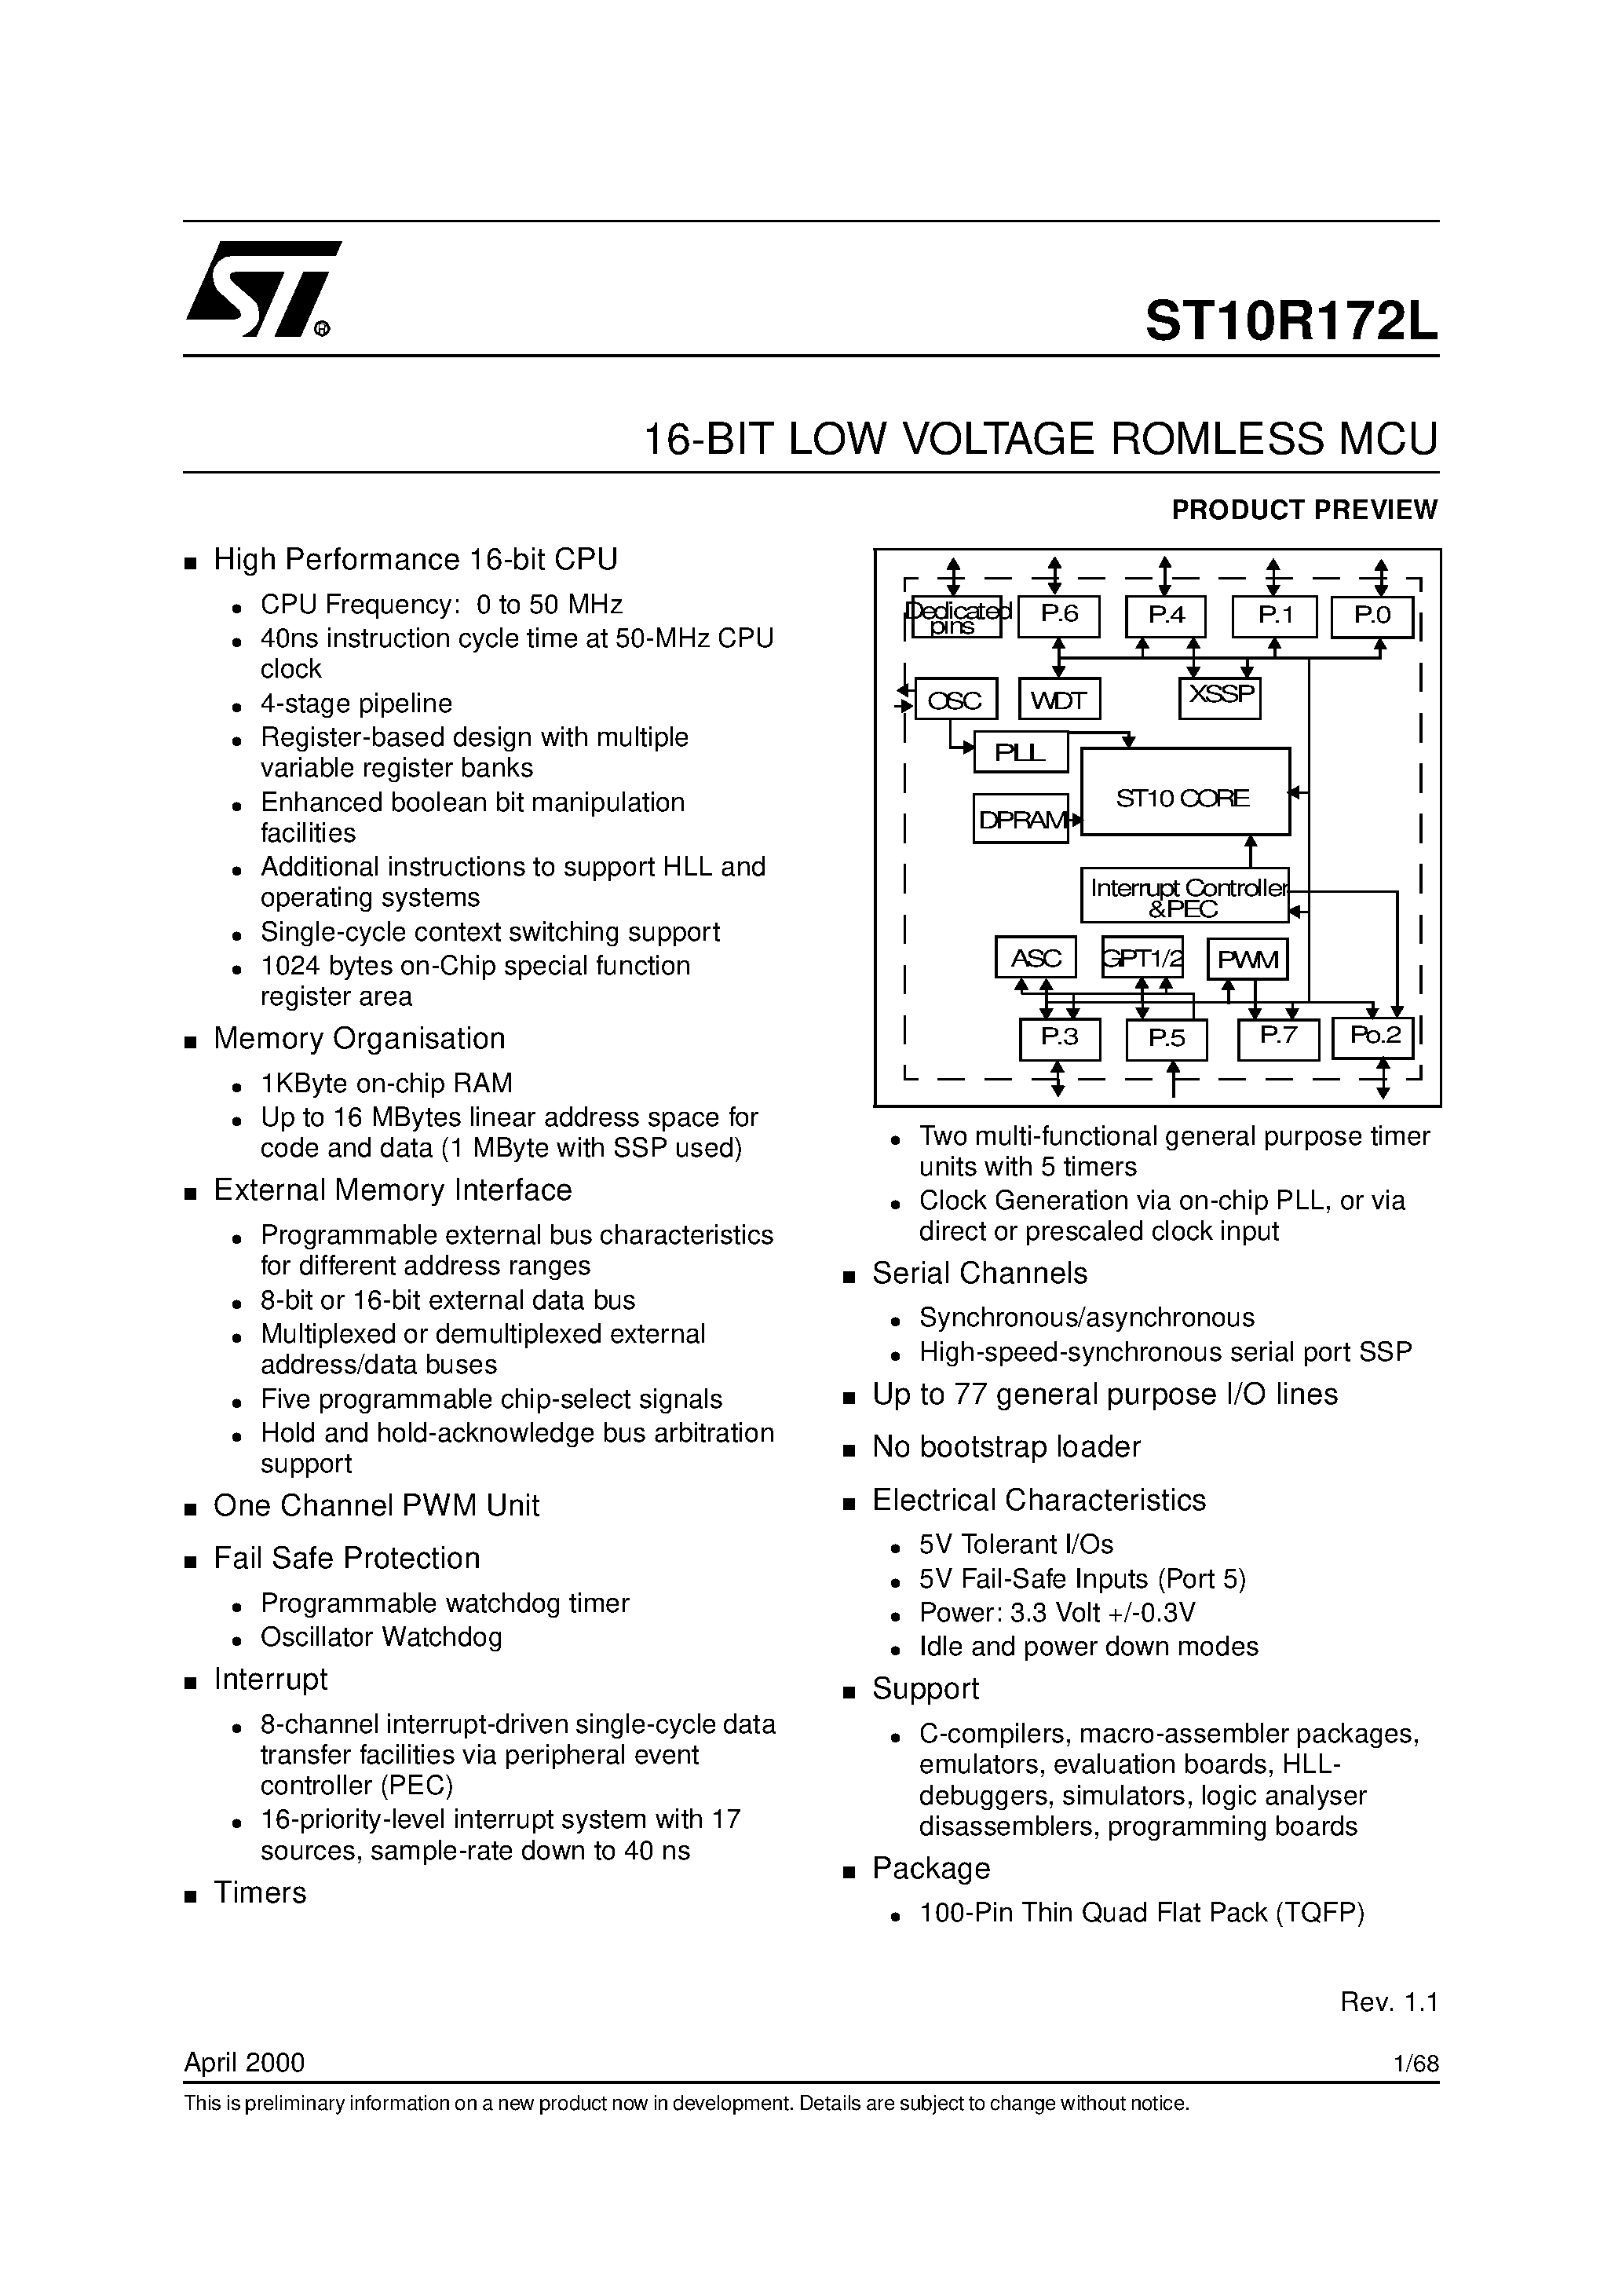 Datasheet ST10R172L - 16-BIT LOW VOLTAGE ROMLESS MCU page 1